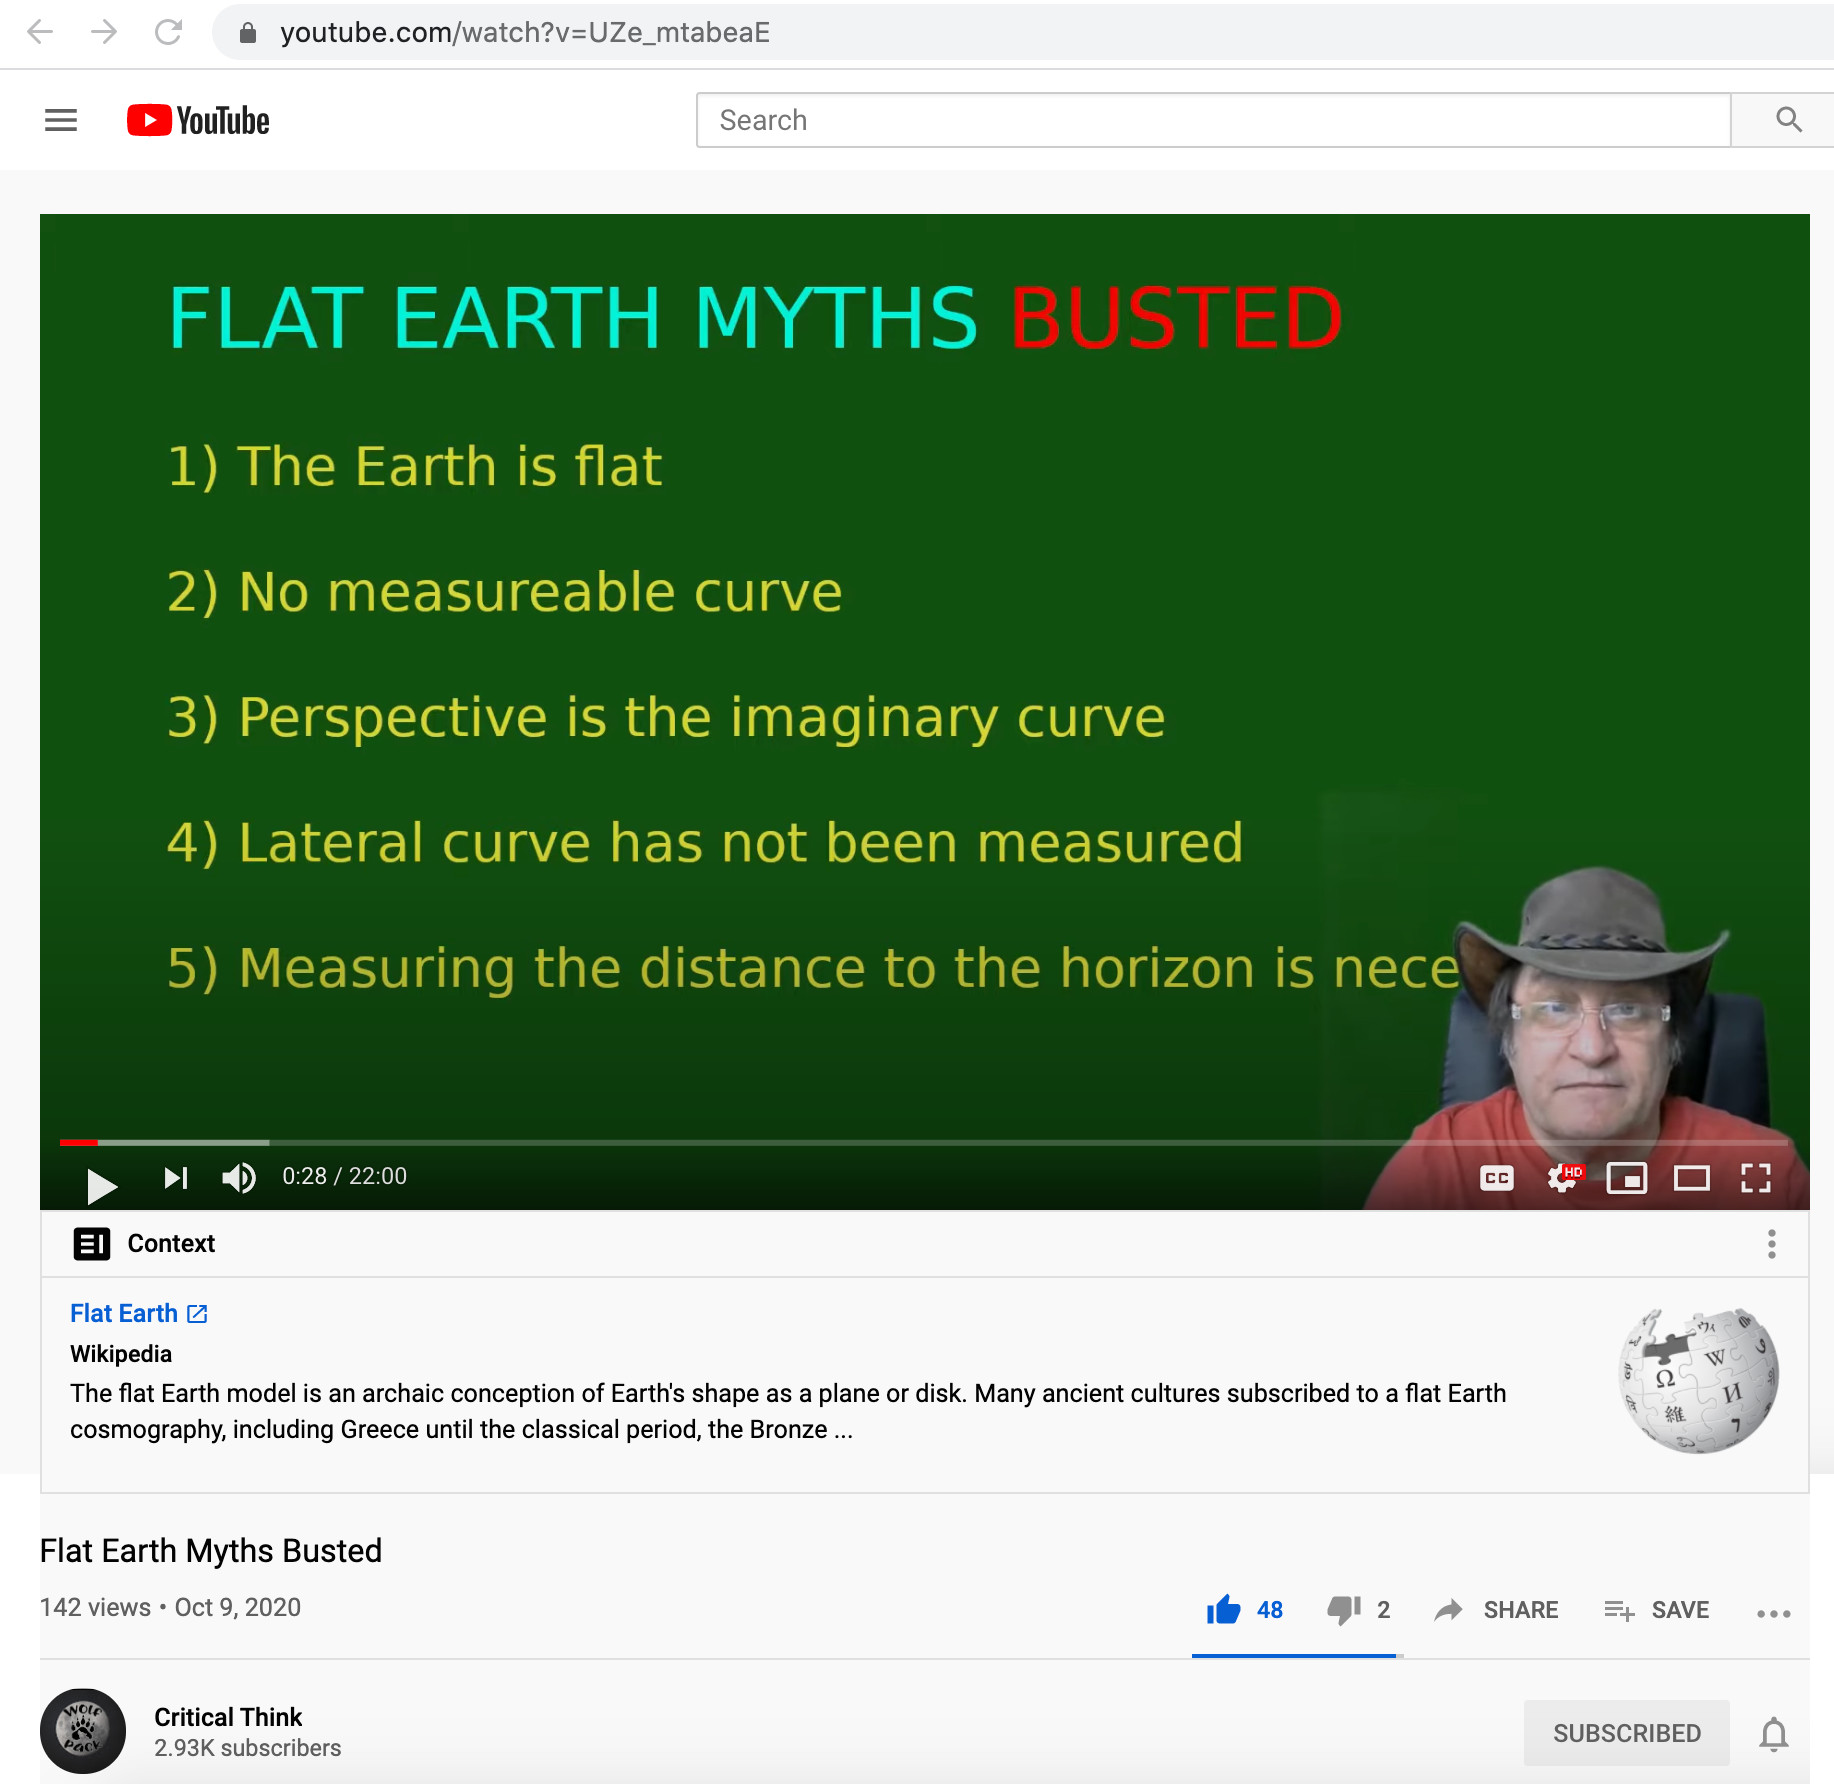 Critical Think - Flat Earth Myths Busted .jpg